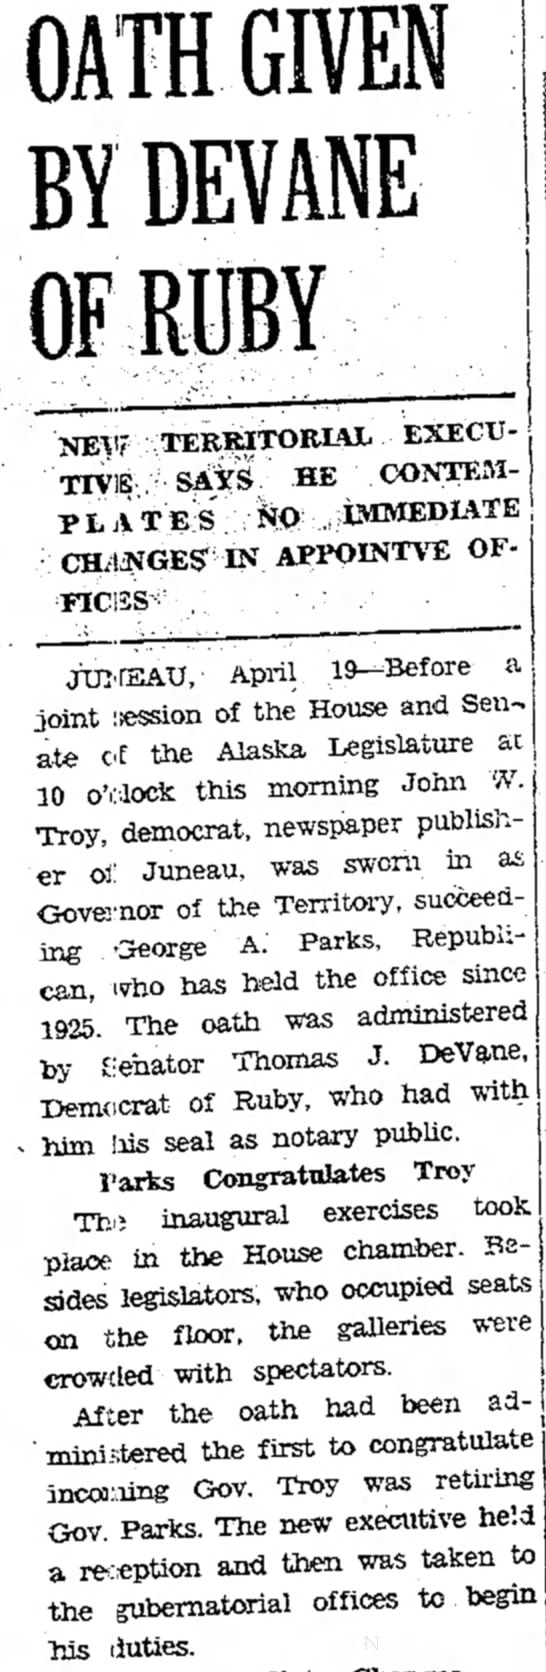 Troy Sworn In As Governor of Alaska